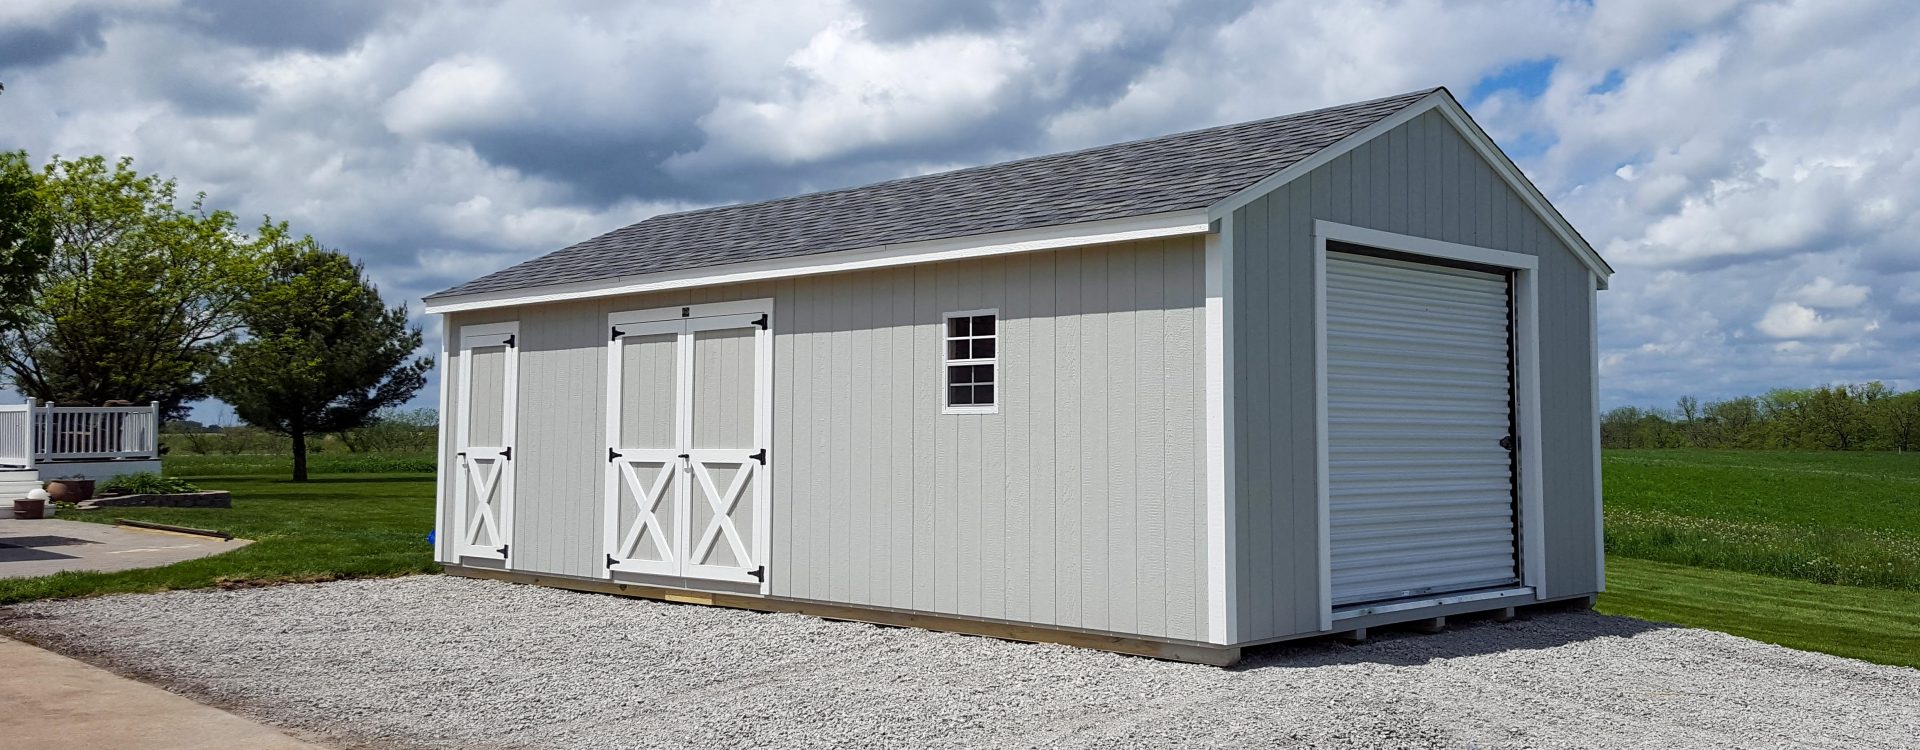 storage sheds and garages in pella iowa